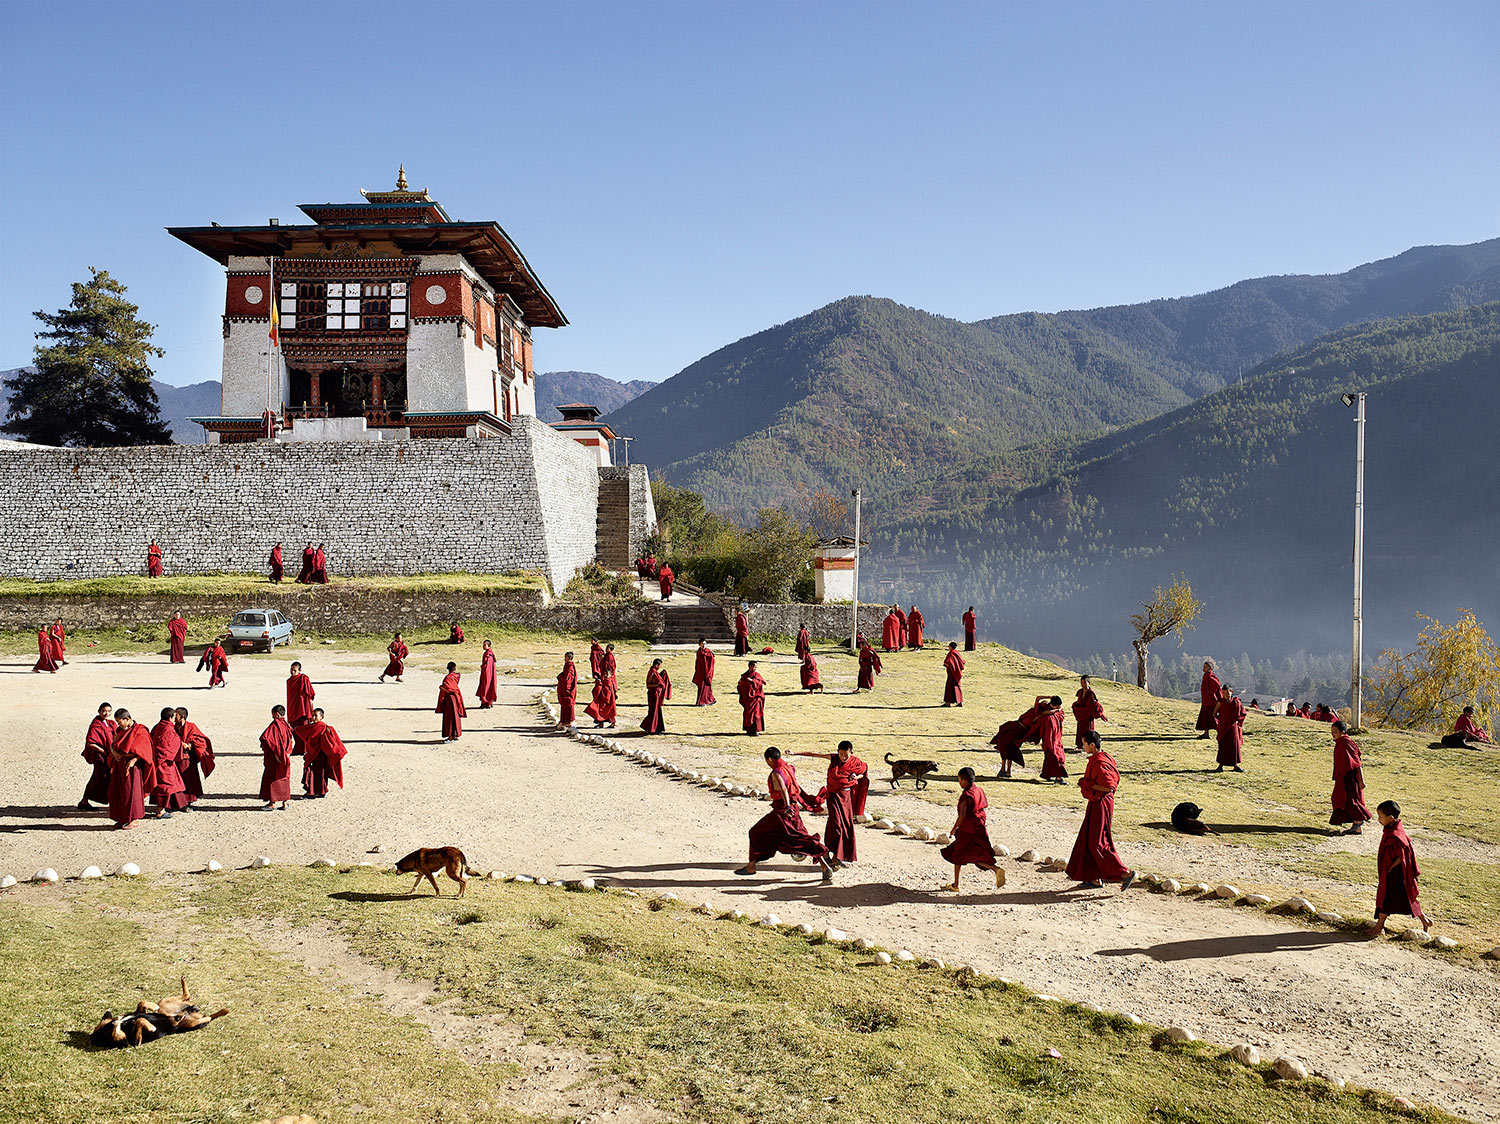 Dechen Phodrang,Thimphu, Bhutan